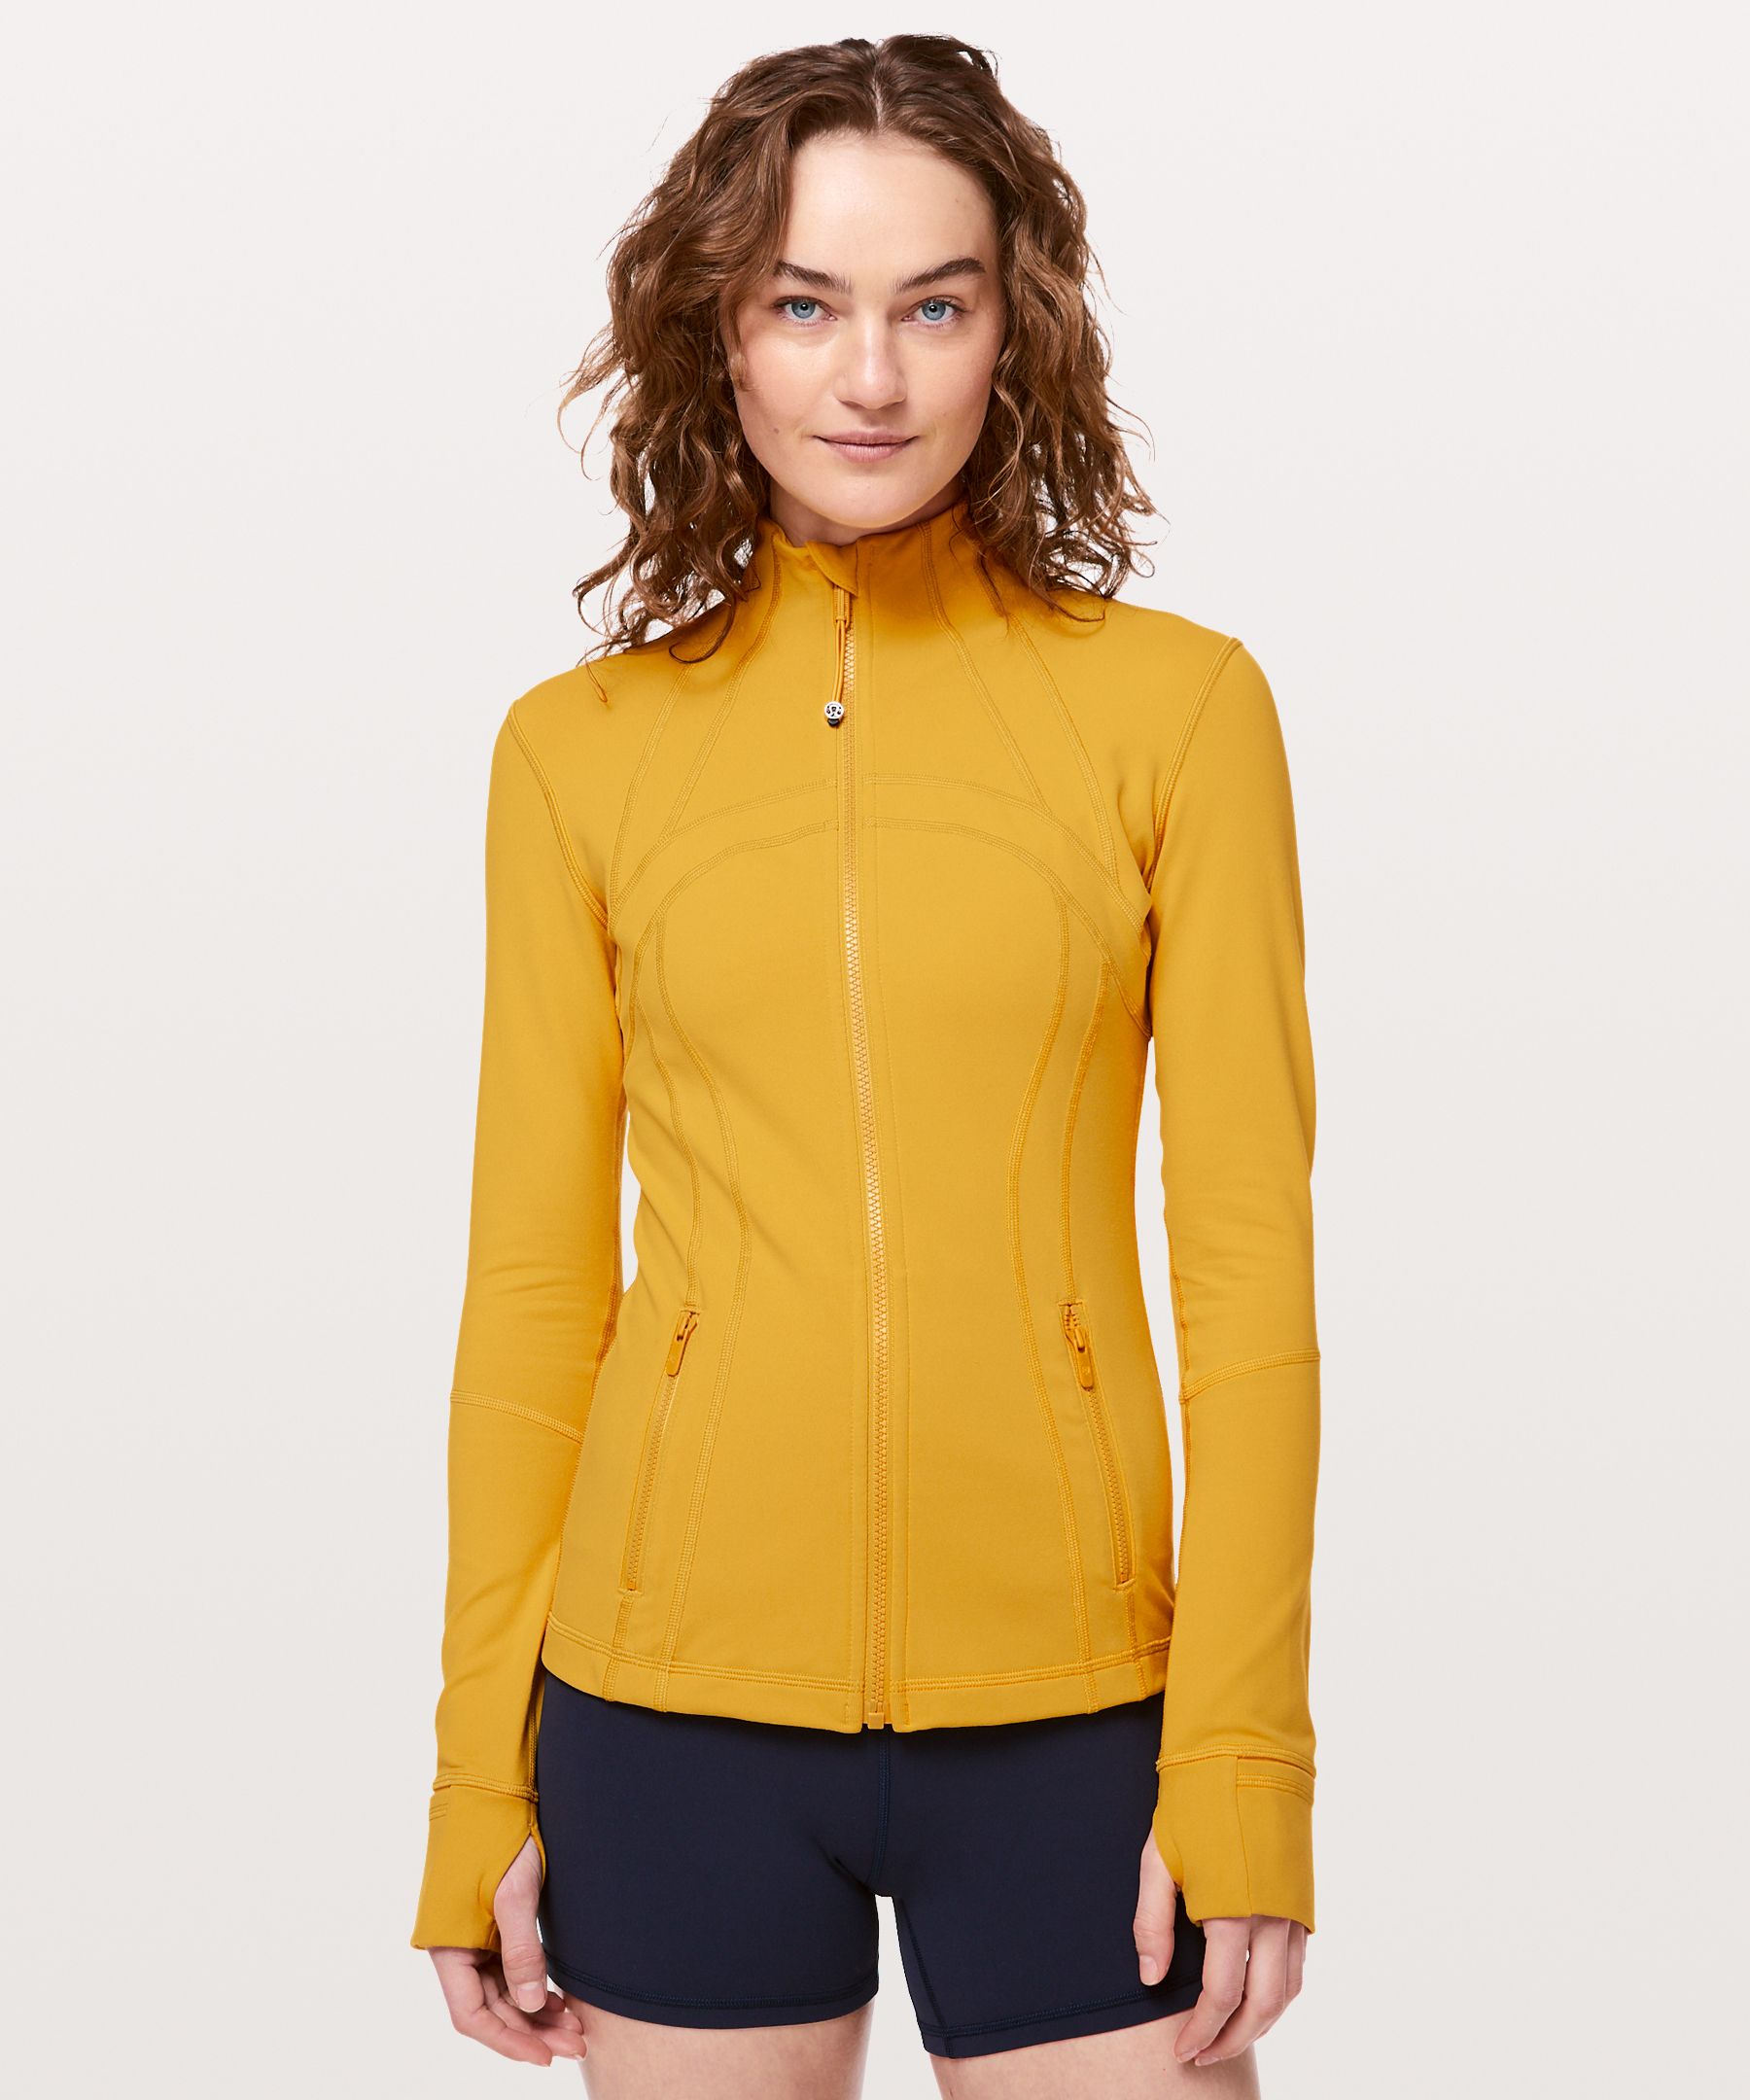 yellow lululemon jacket